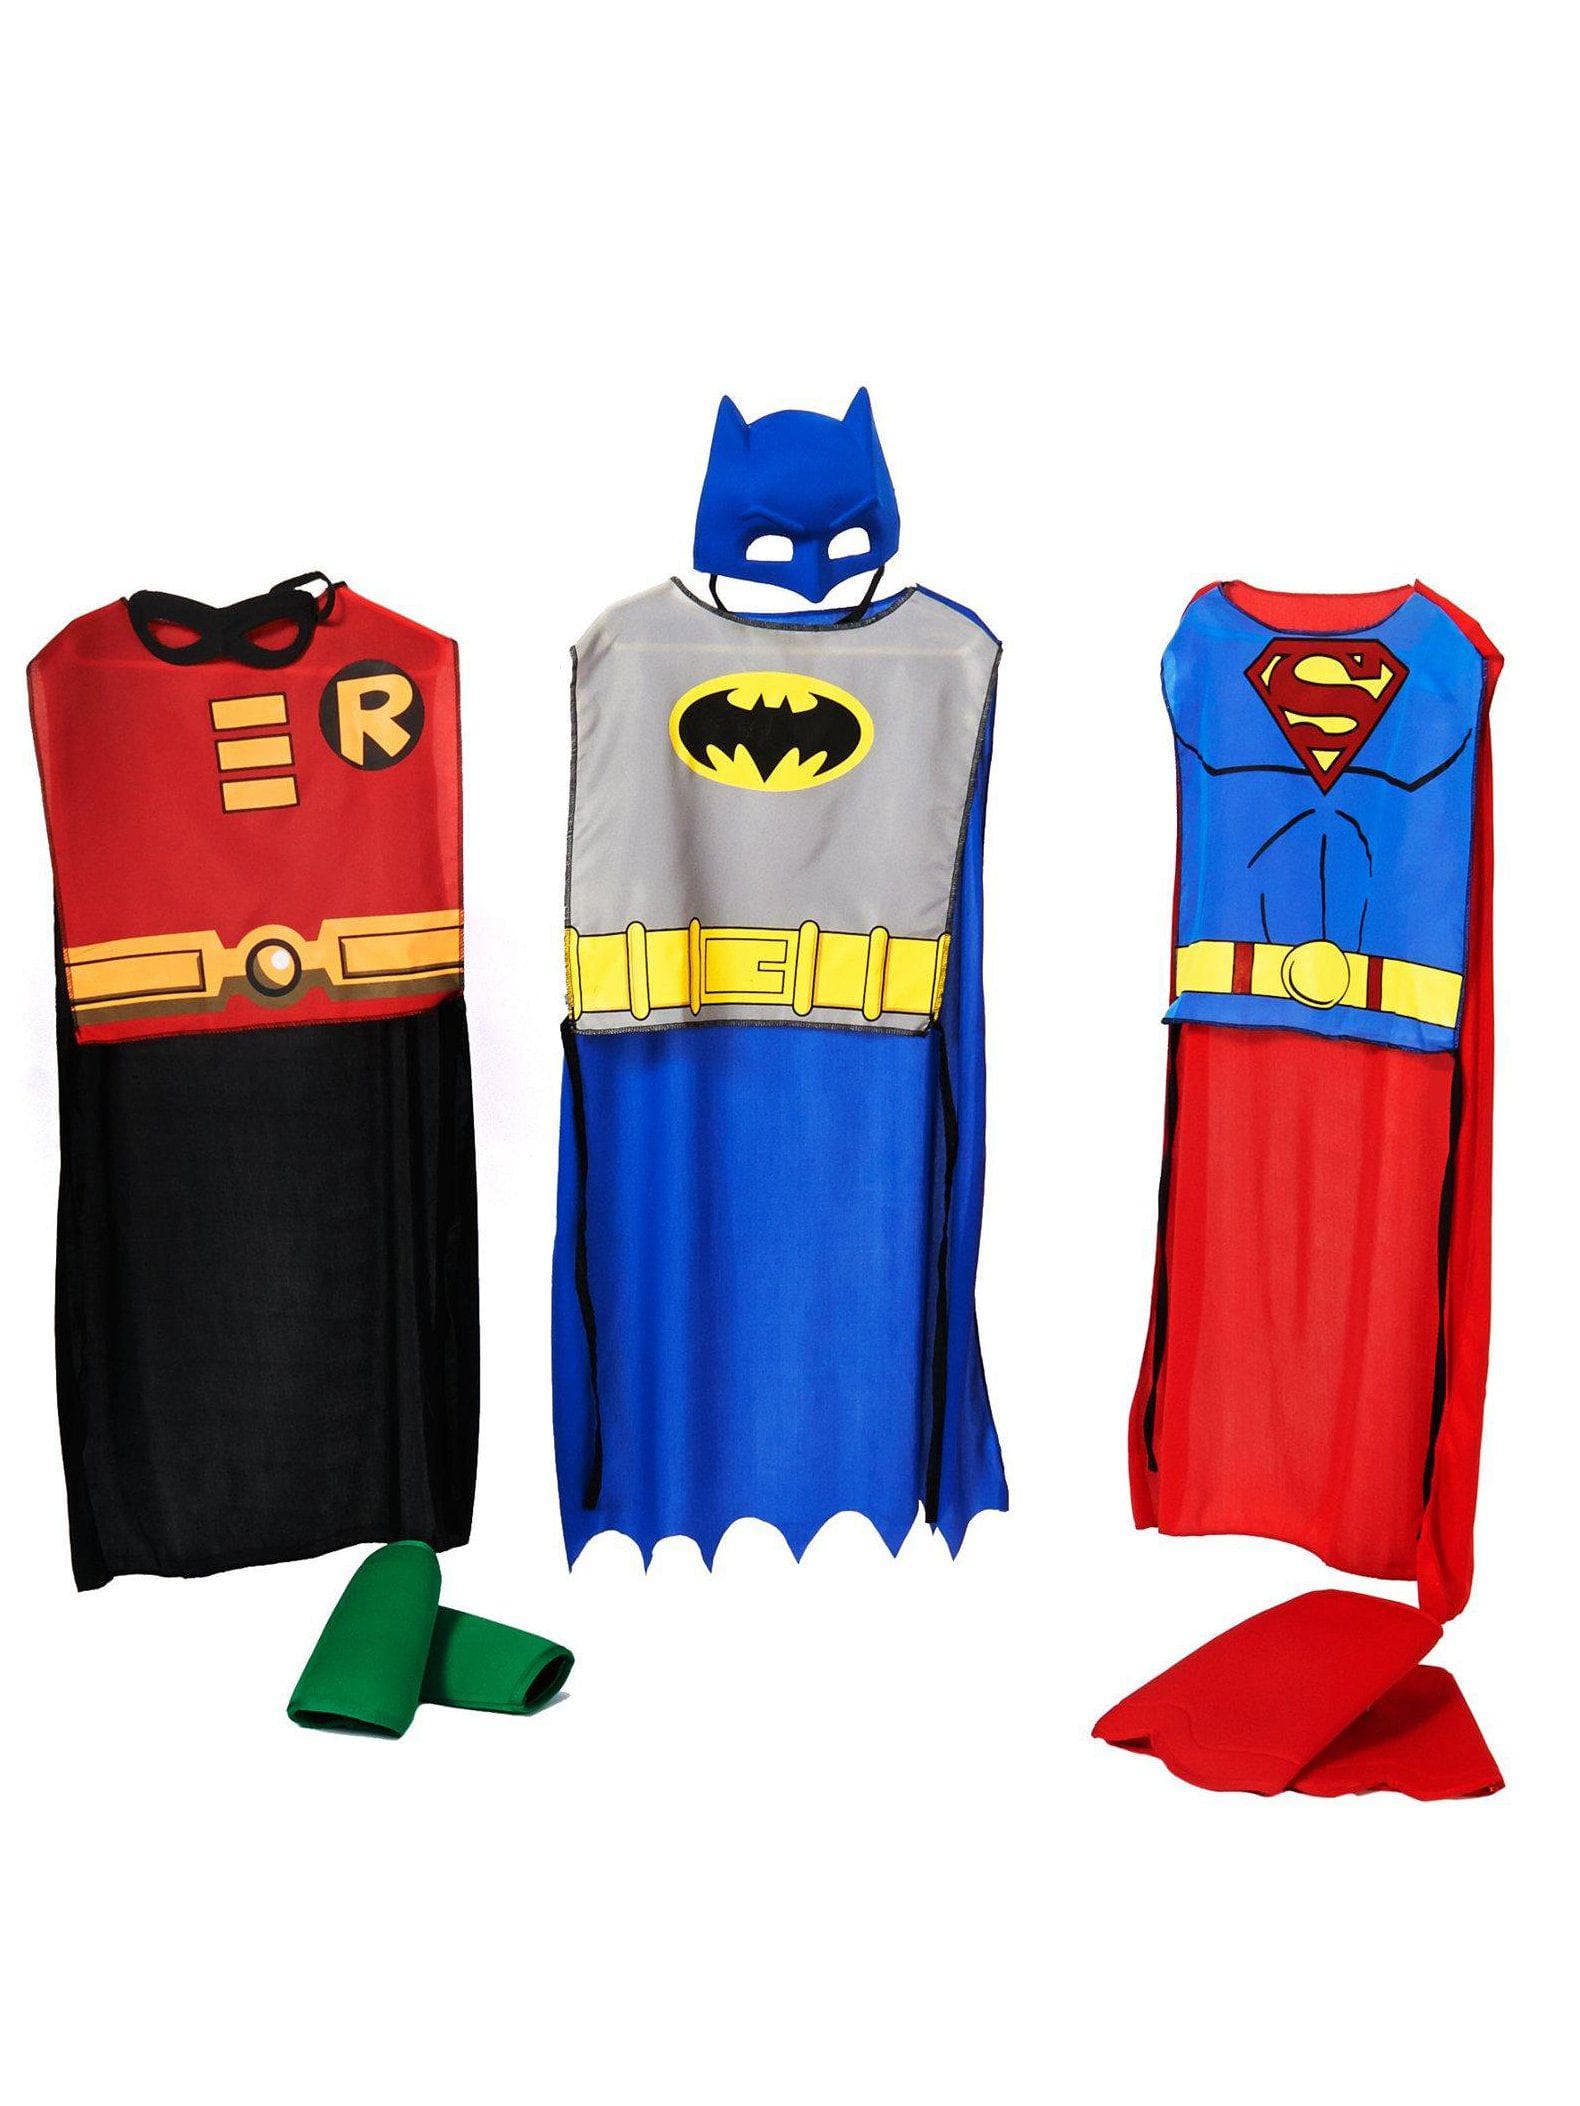 Kid's DC Comics Costume - costumes.com